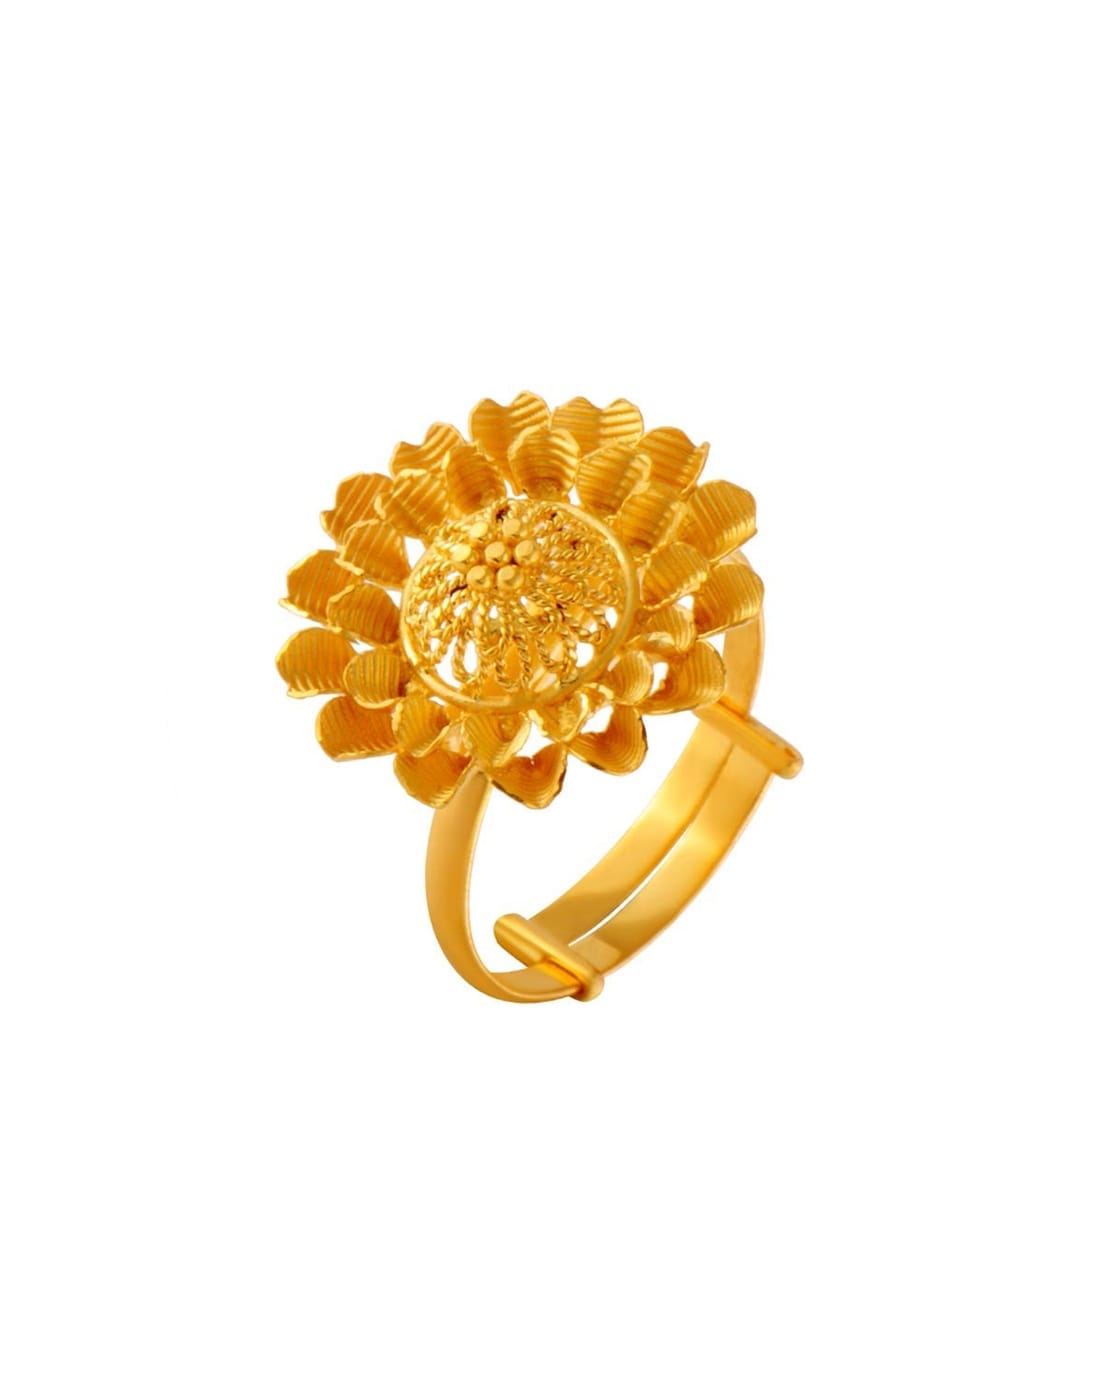 Genuine 22K Solid Yellow Gold Ring US 7.25 Female Hallmarked 916 Flower &  Leaf | eBay